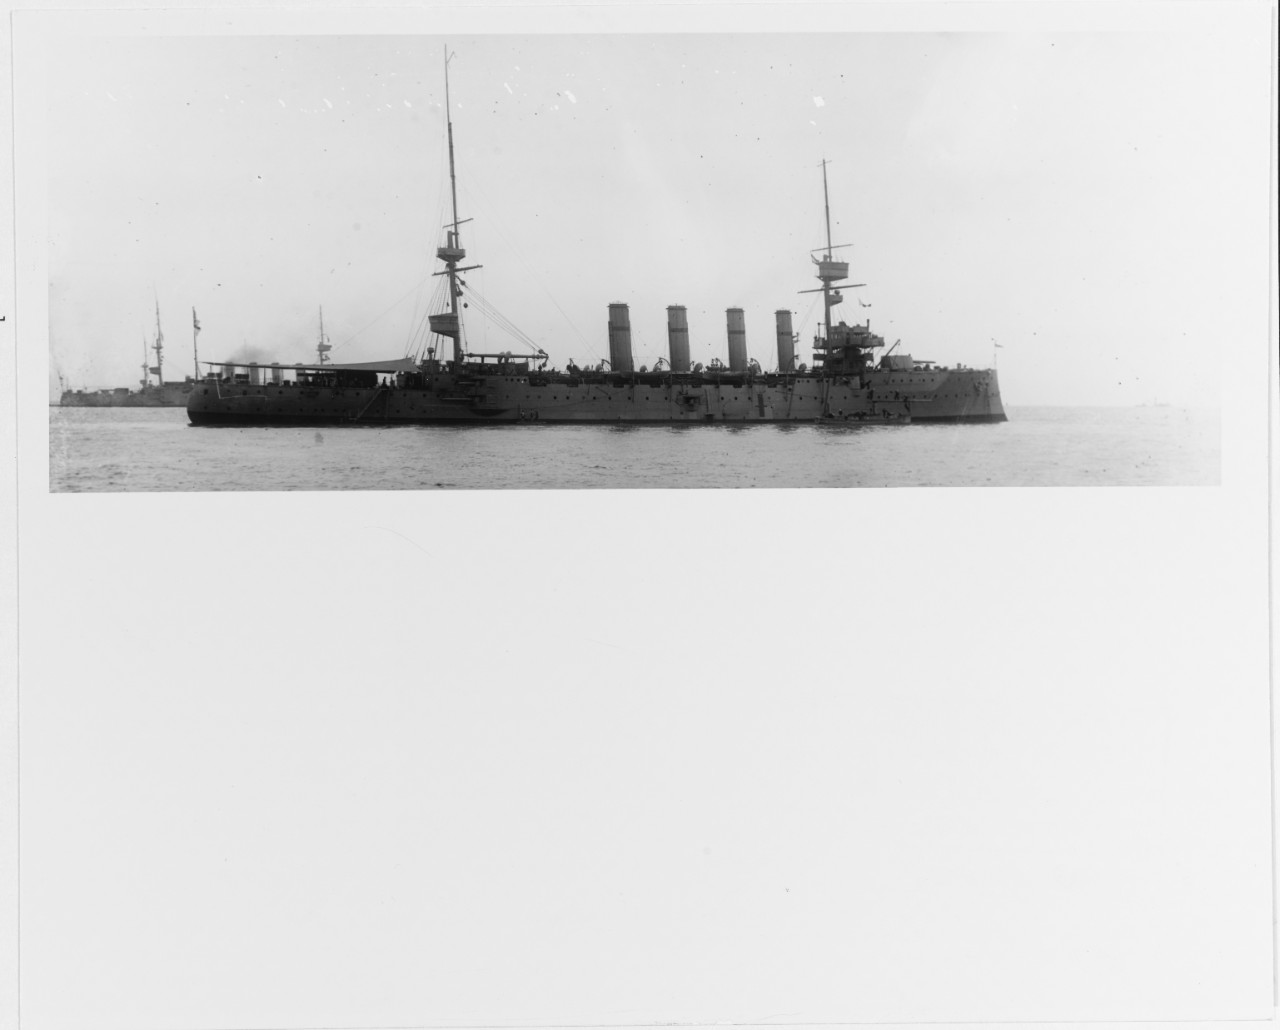 HMS HAMPSHIRE (British armored cruiser, 1903)